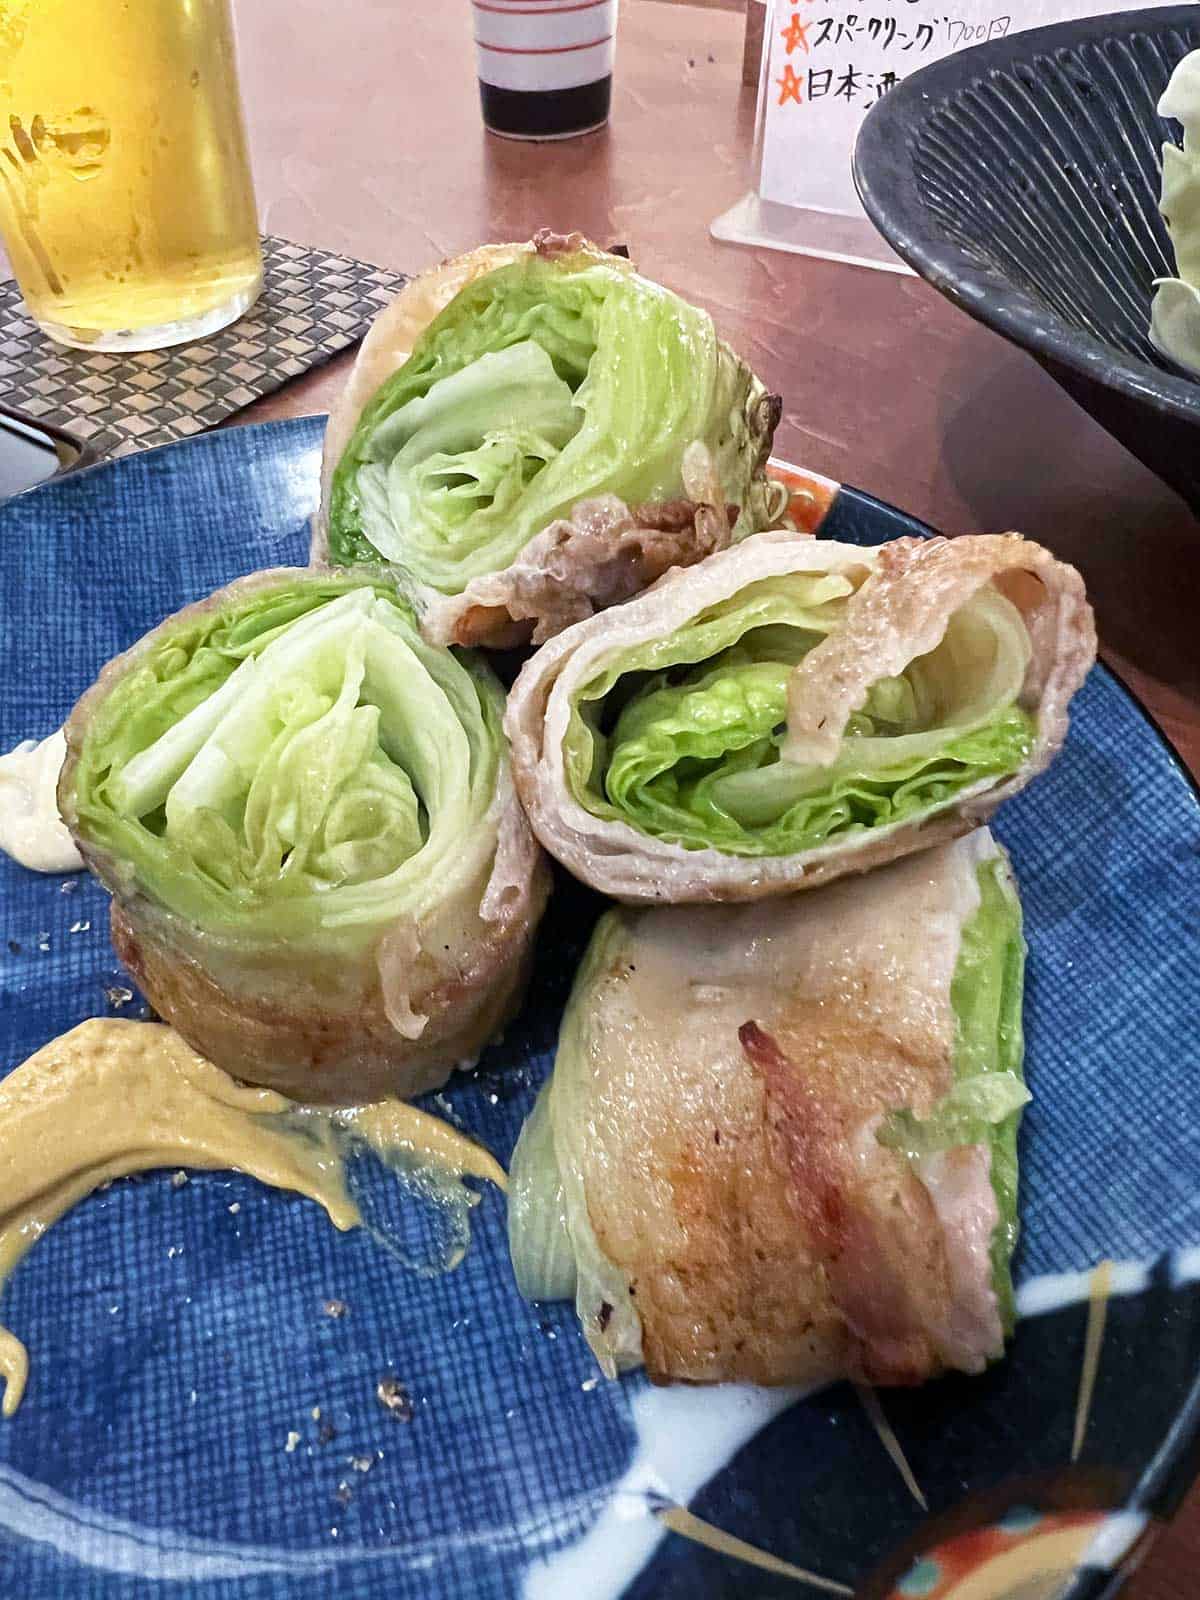 Pork and lettuce kushiyaki on a serving plate.